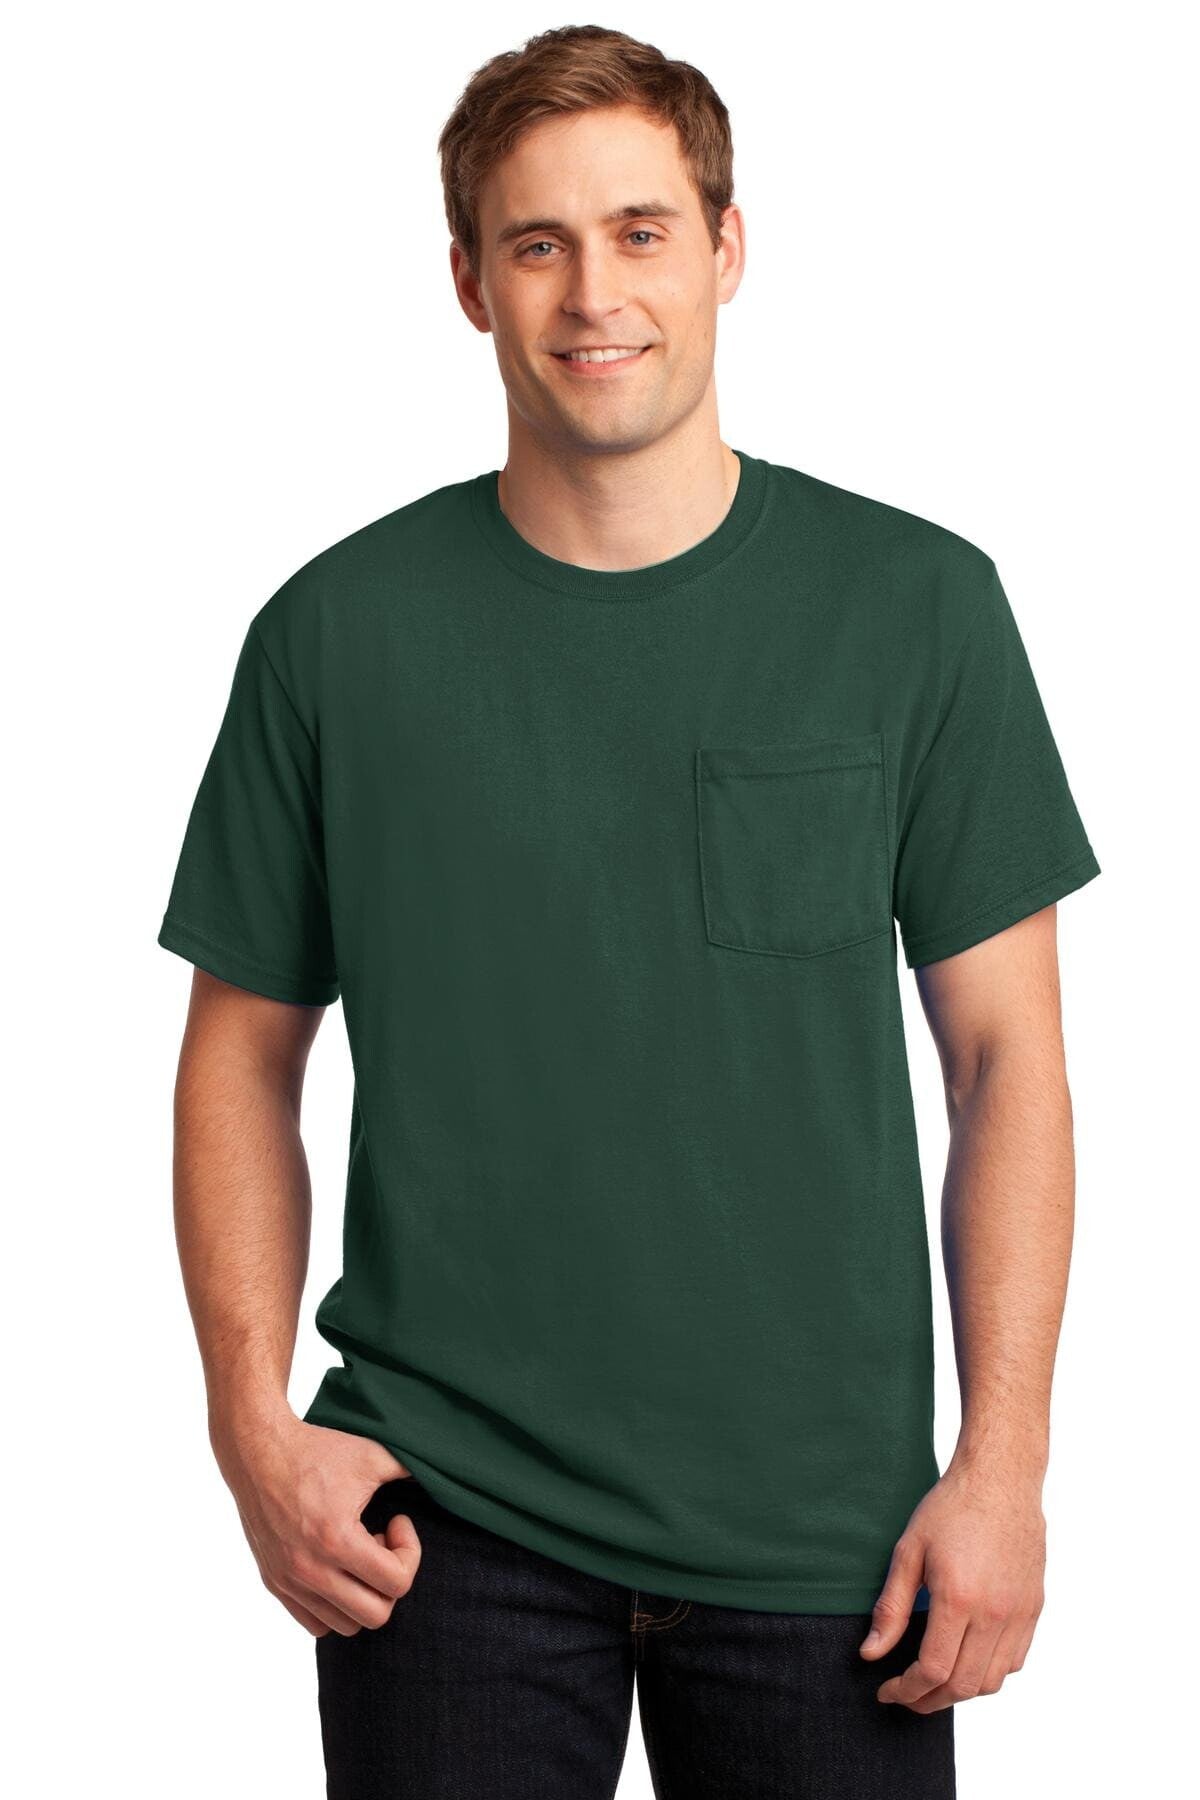 Jerzees - Dri - power 50/50 Cotton/poly Pocket T - shirt. 29mp Activewear T